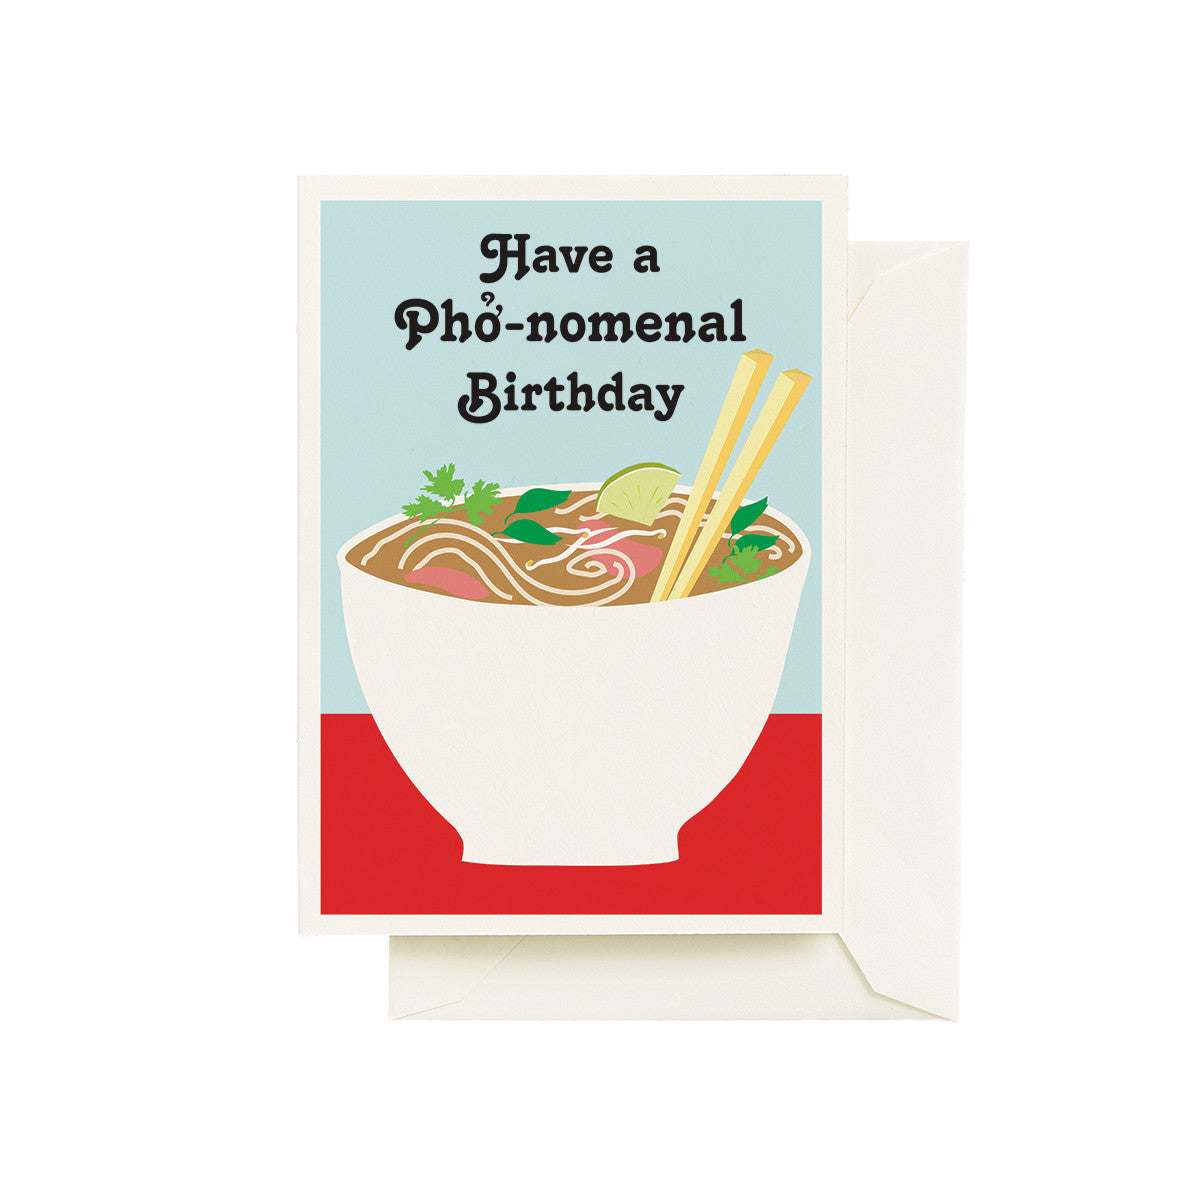 Have a Pho-nomenal Birthday Card | Seltzer Goods - Oscar & Libby's